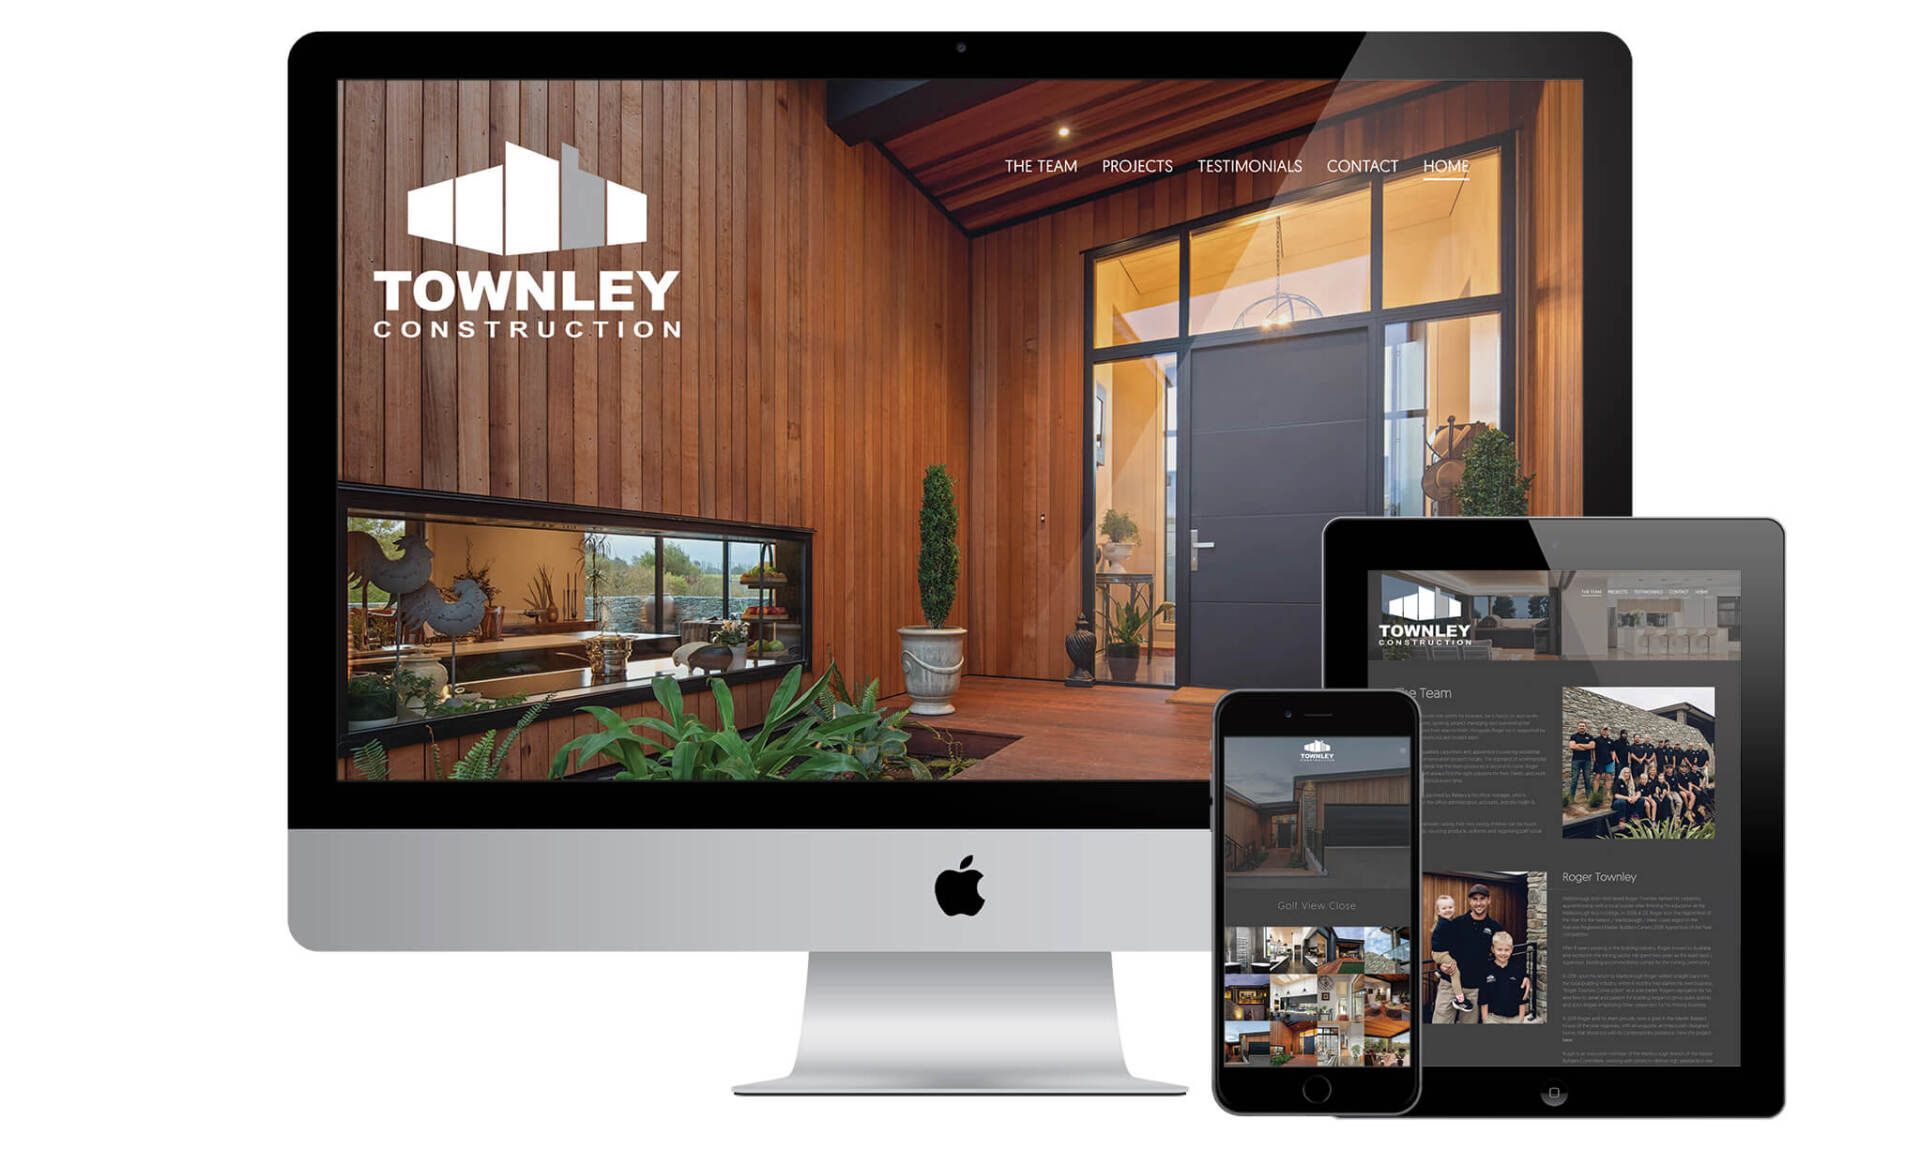 Townley Construction website designed by Vanilla Hayes creative graphic design  studio in Blenheim, Marlborough, New Zealand